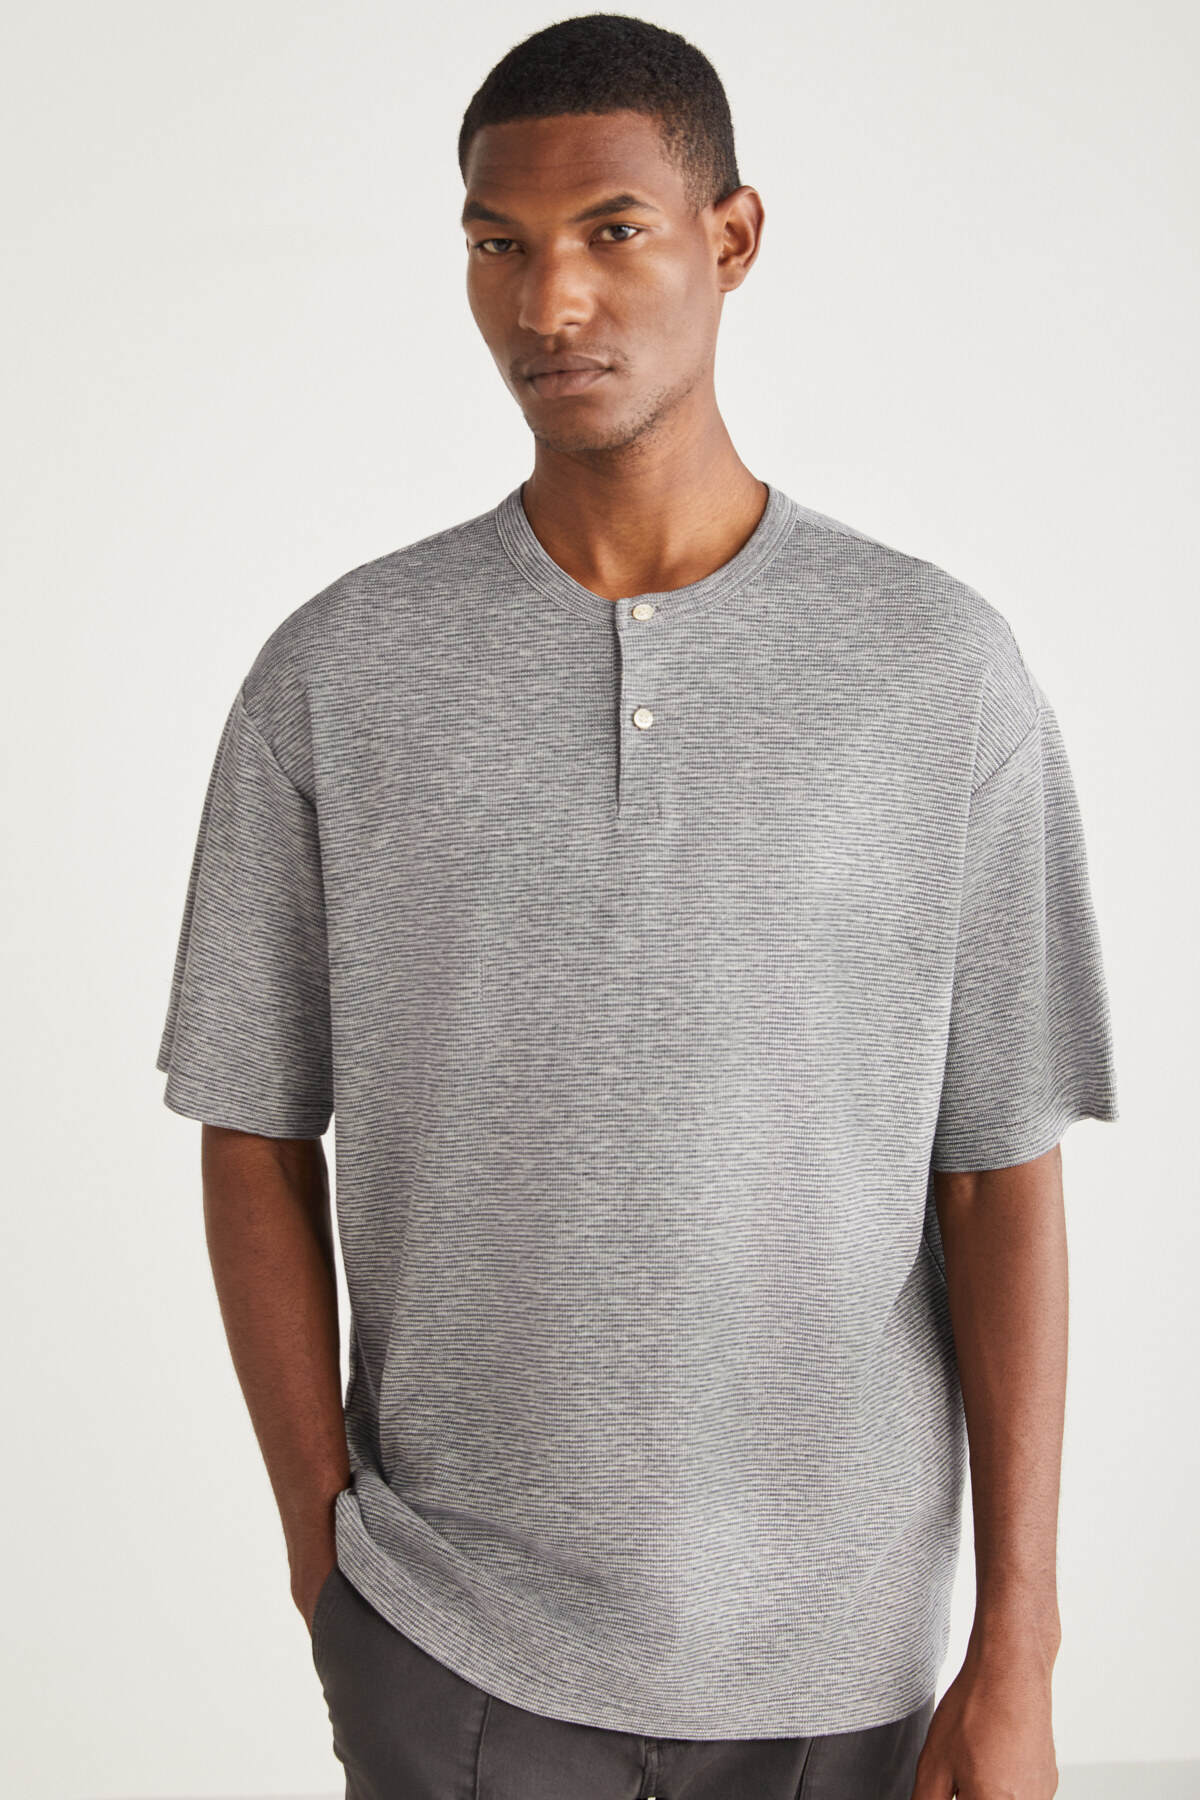 GRIMELANGE Millard Men's Button Collar Comfort Fit Special Textured Gray T-Shirt with Gray Look